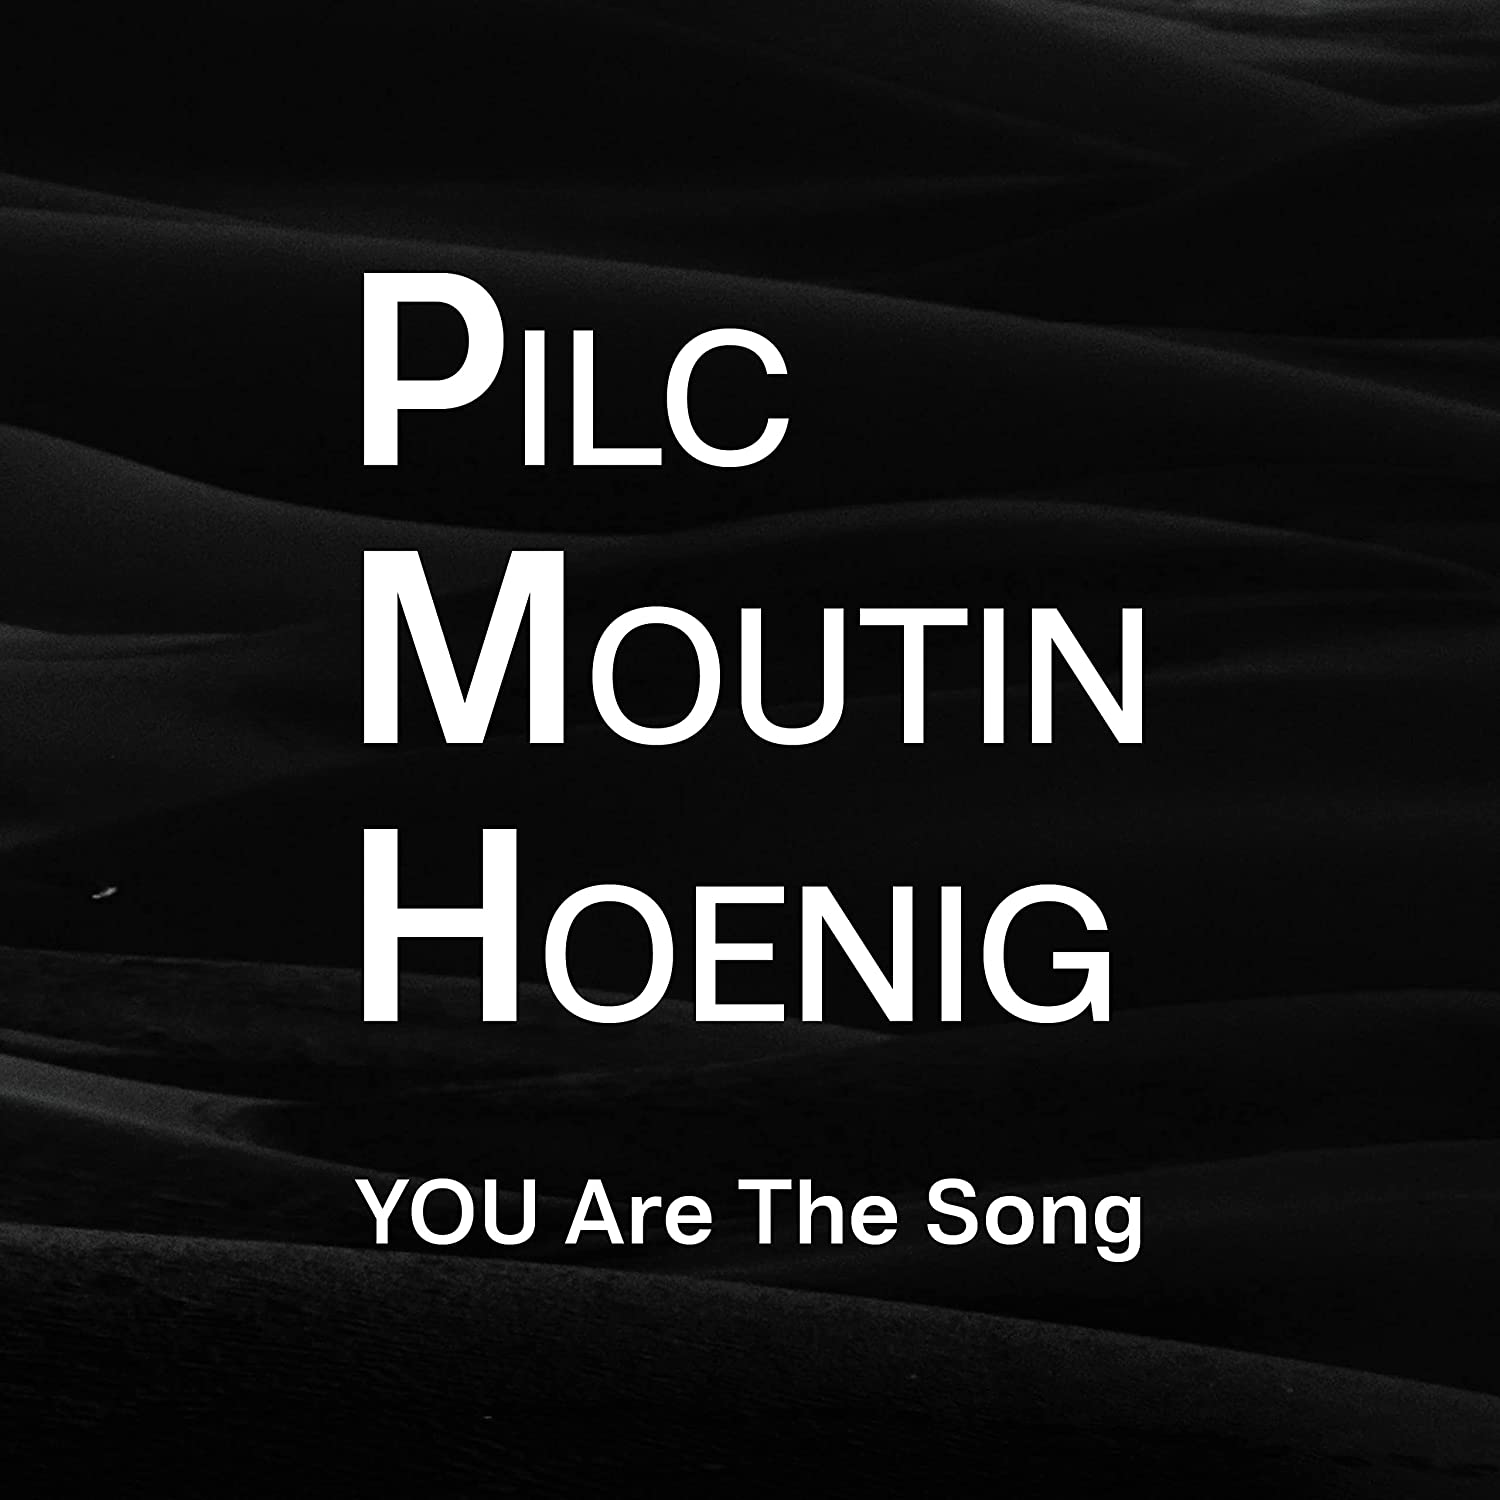 JEAN-MICHEL PILC - Pilc Moutin Hoenig : You Are the Song cover 